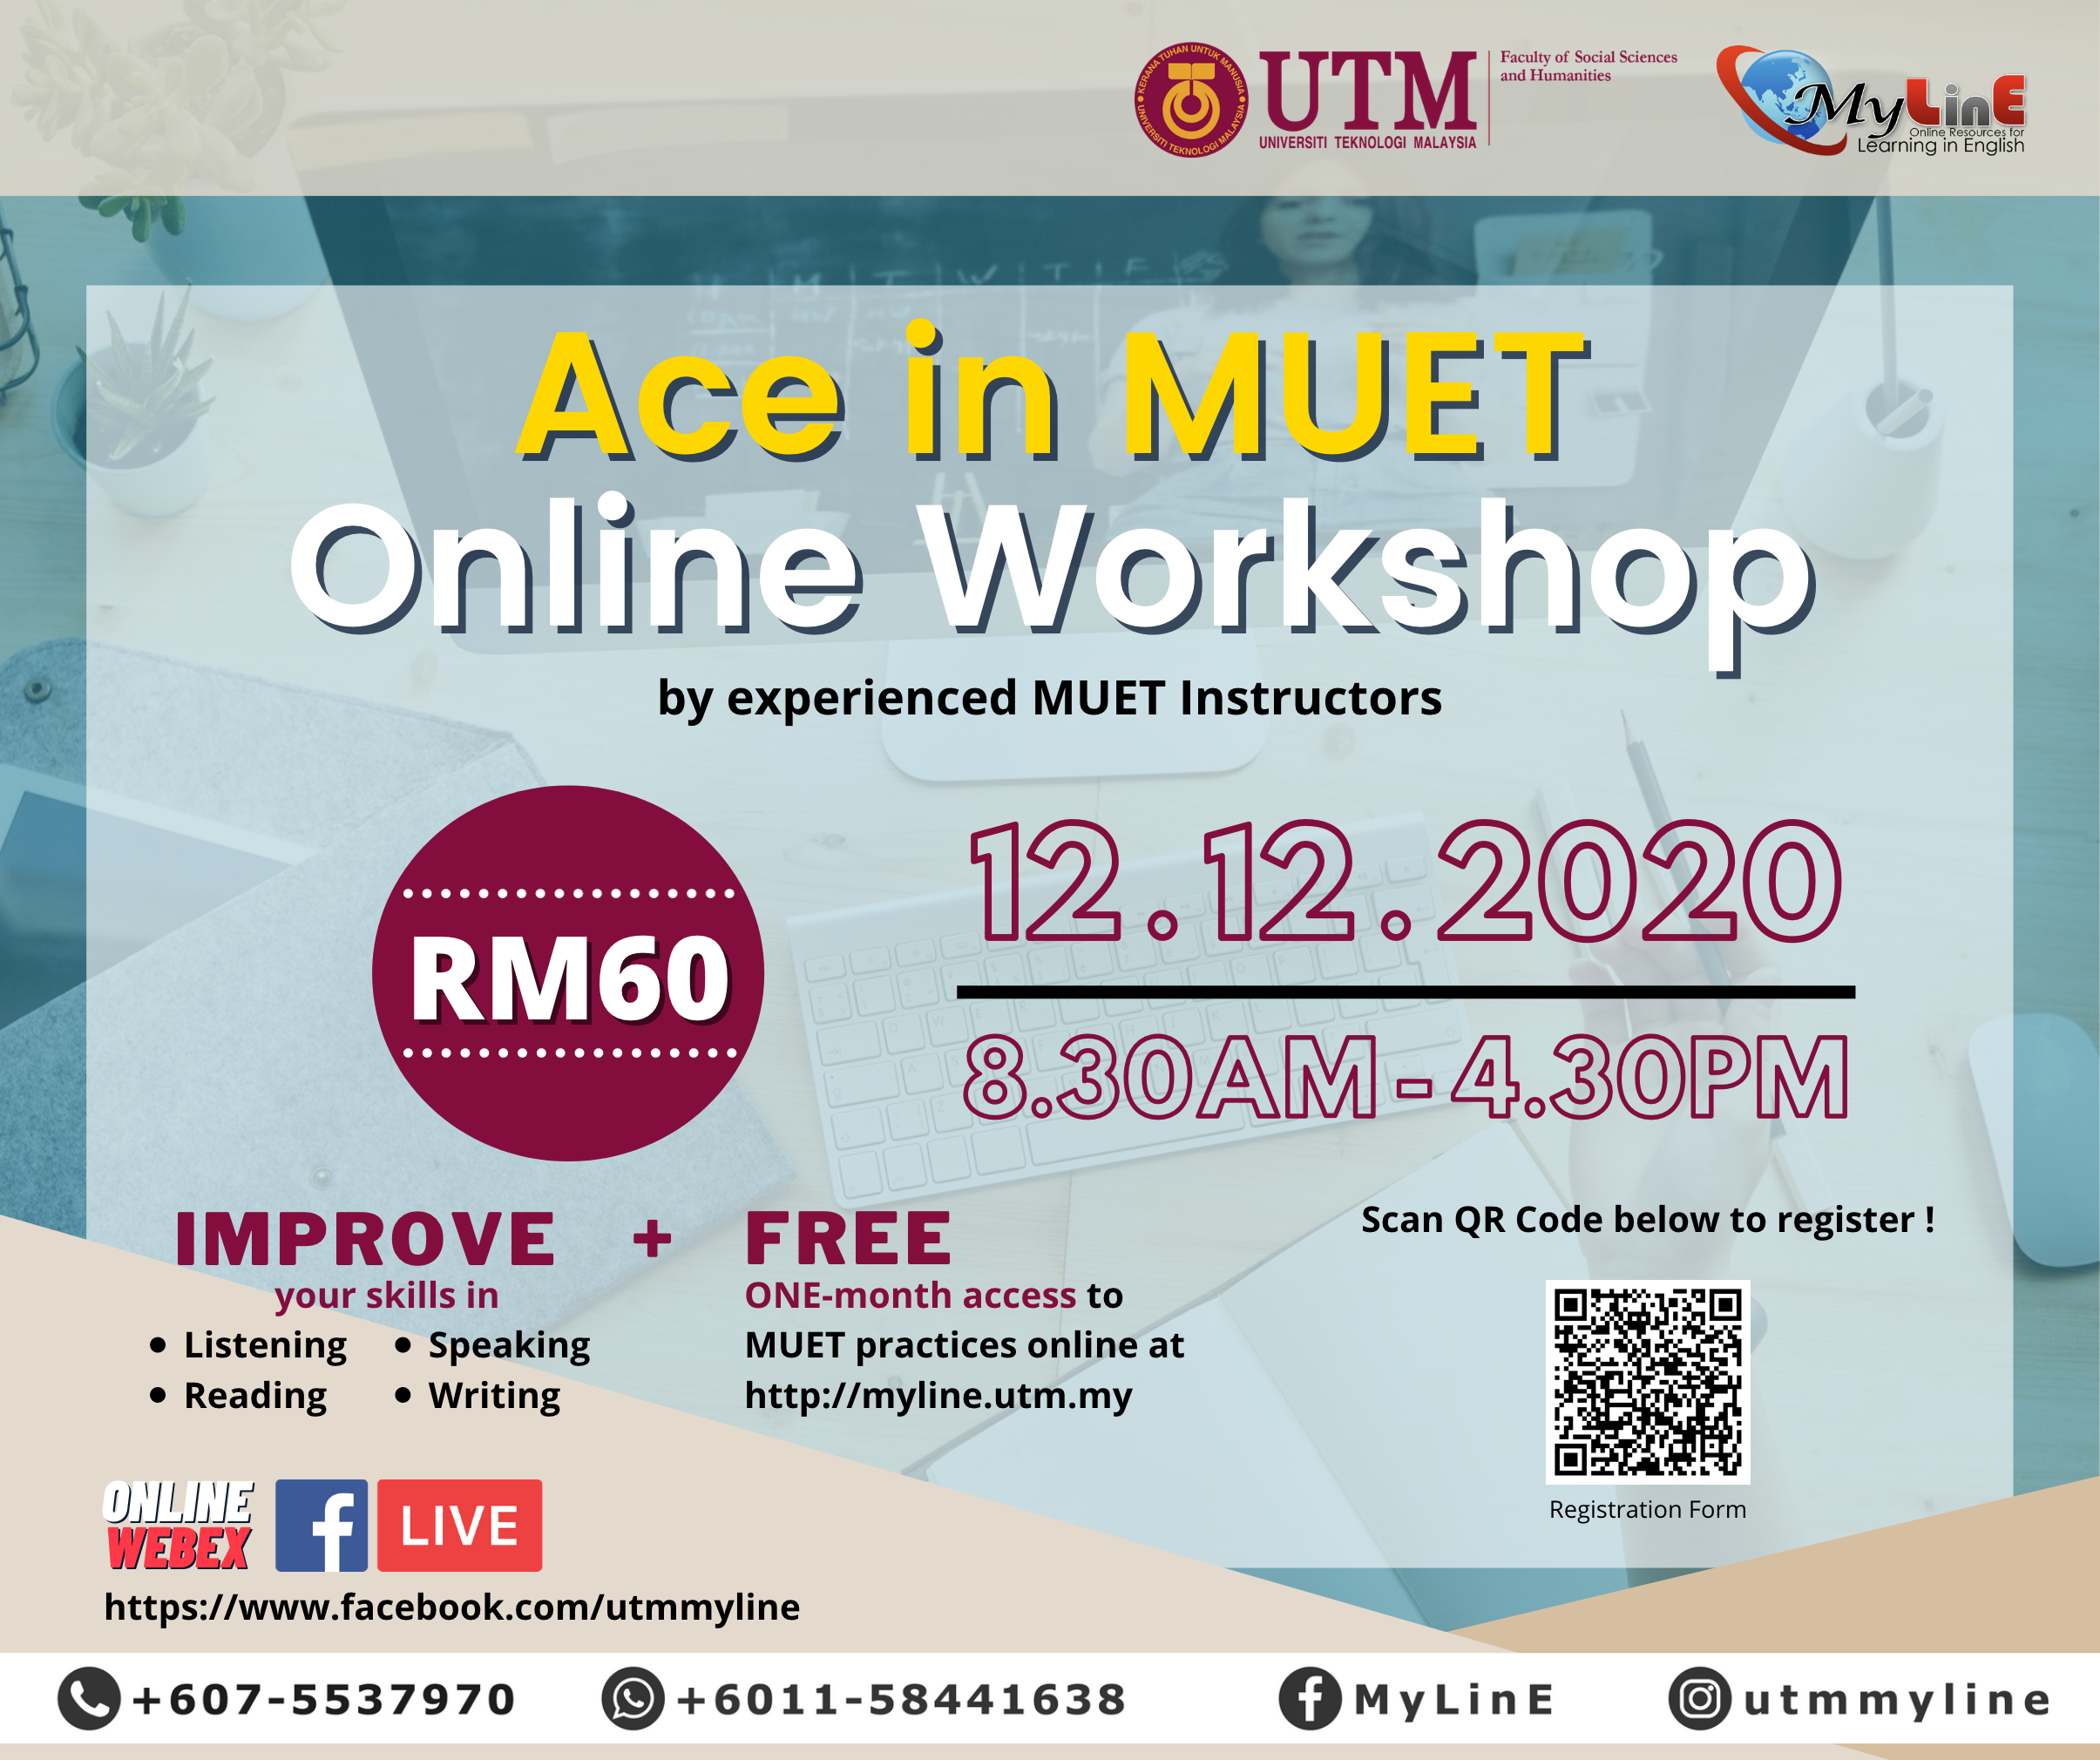 Ace in MUET Online Workshop